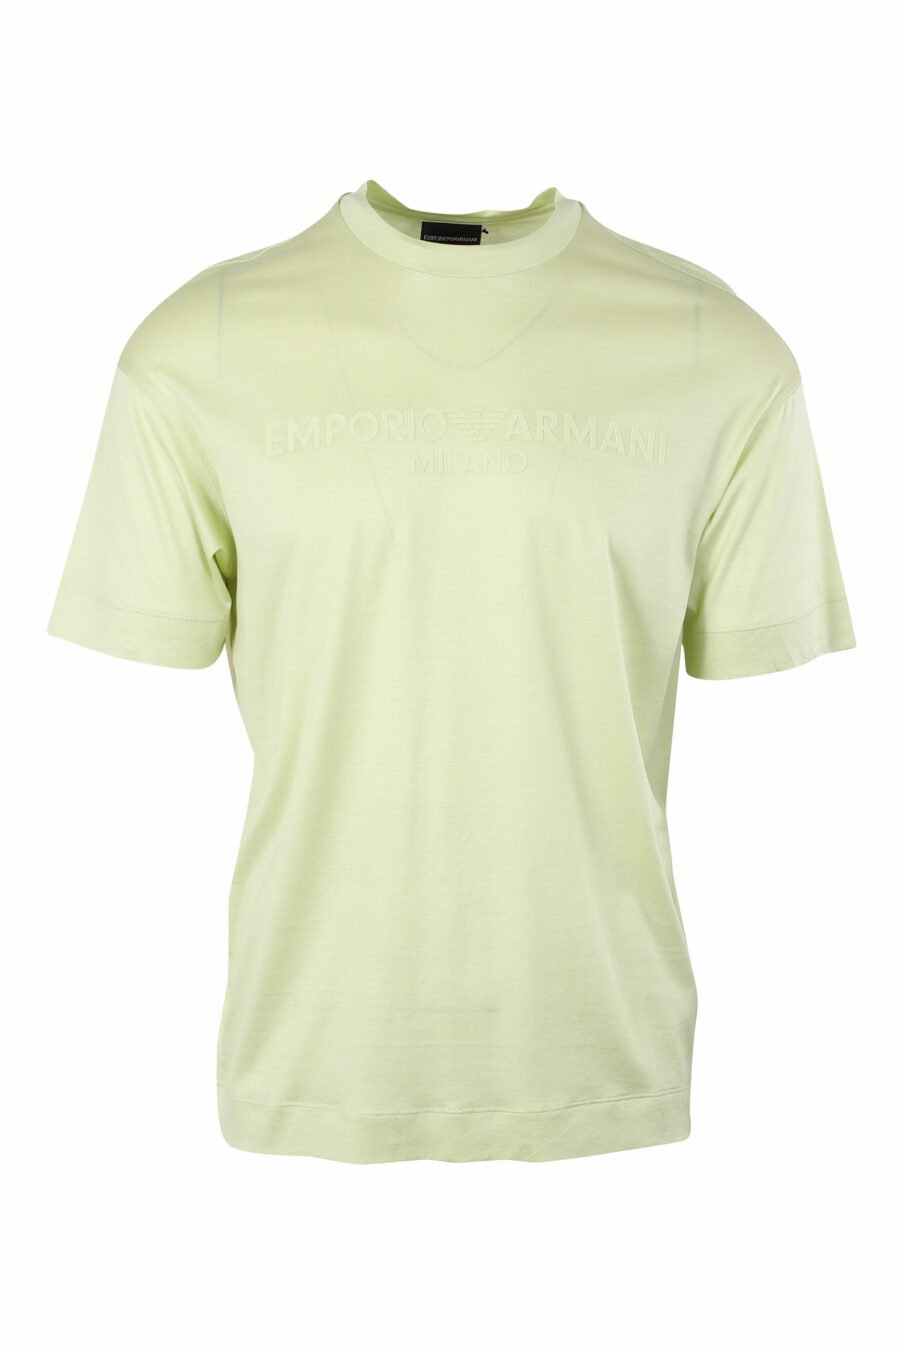 Green T-shirt with centred maxilogo - IMG 9629